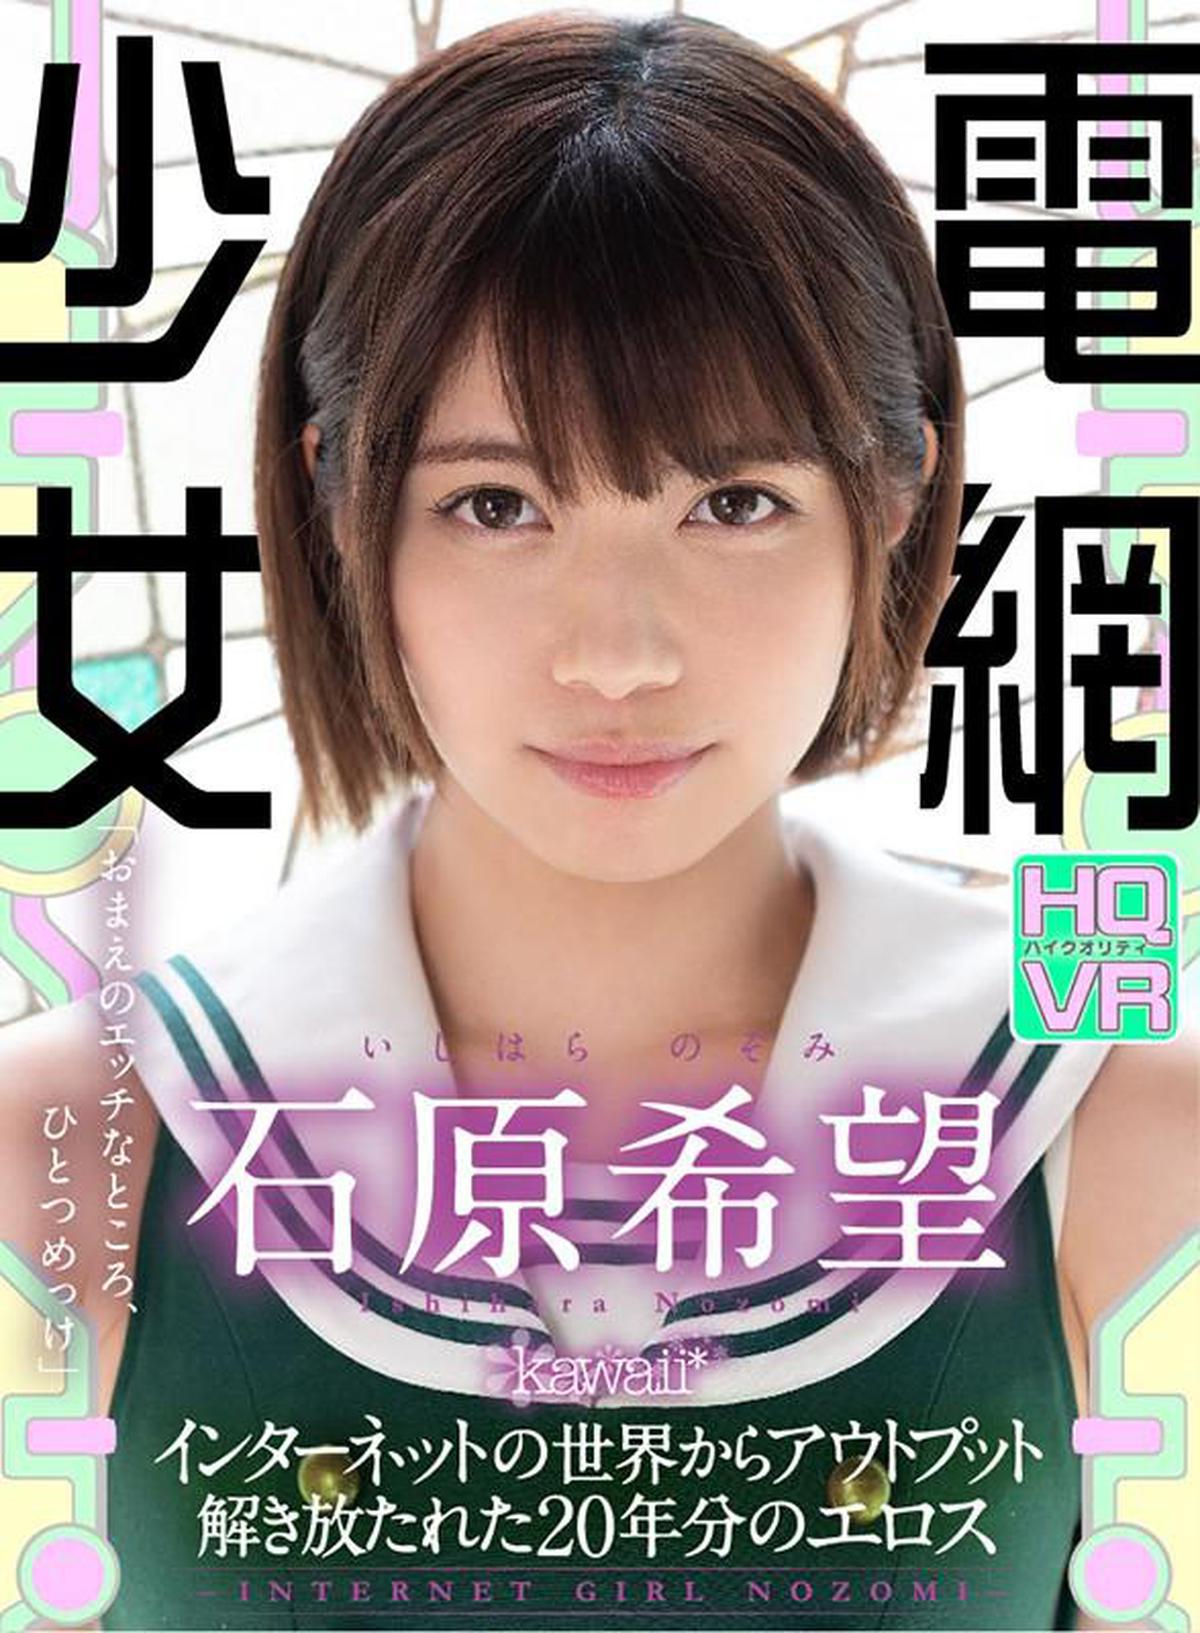 (VR) KAVR-097 Electric Net Girl - INTERNET GIRL NOZOMI- ปลดปล่อย 20 ปีแห่ง Eros Ishihara Nozomi